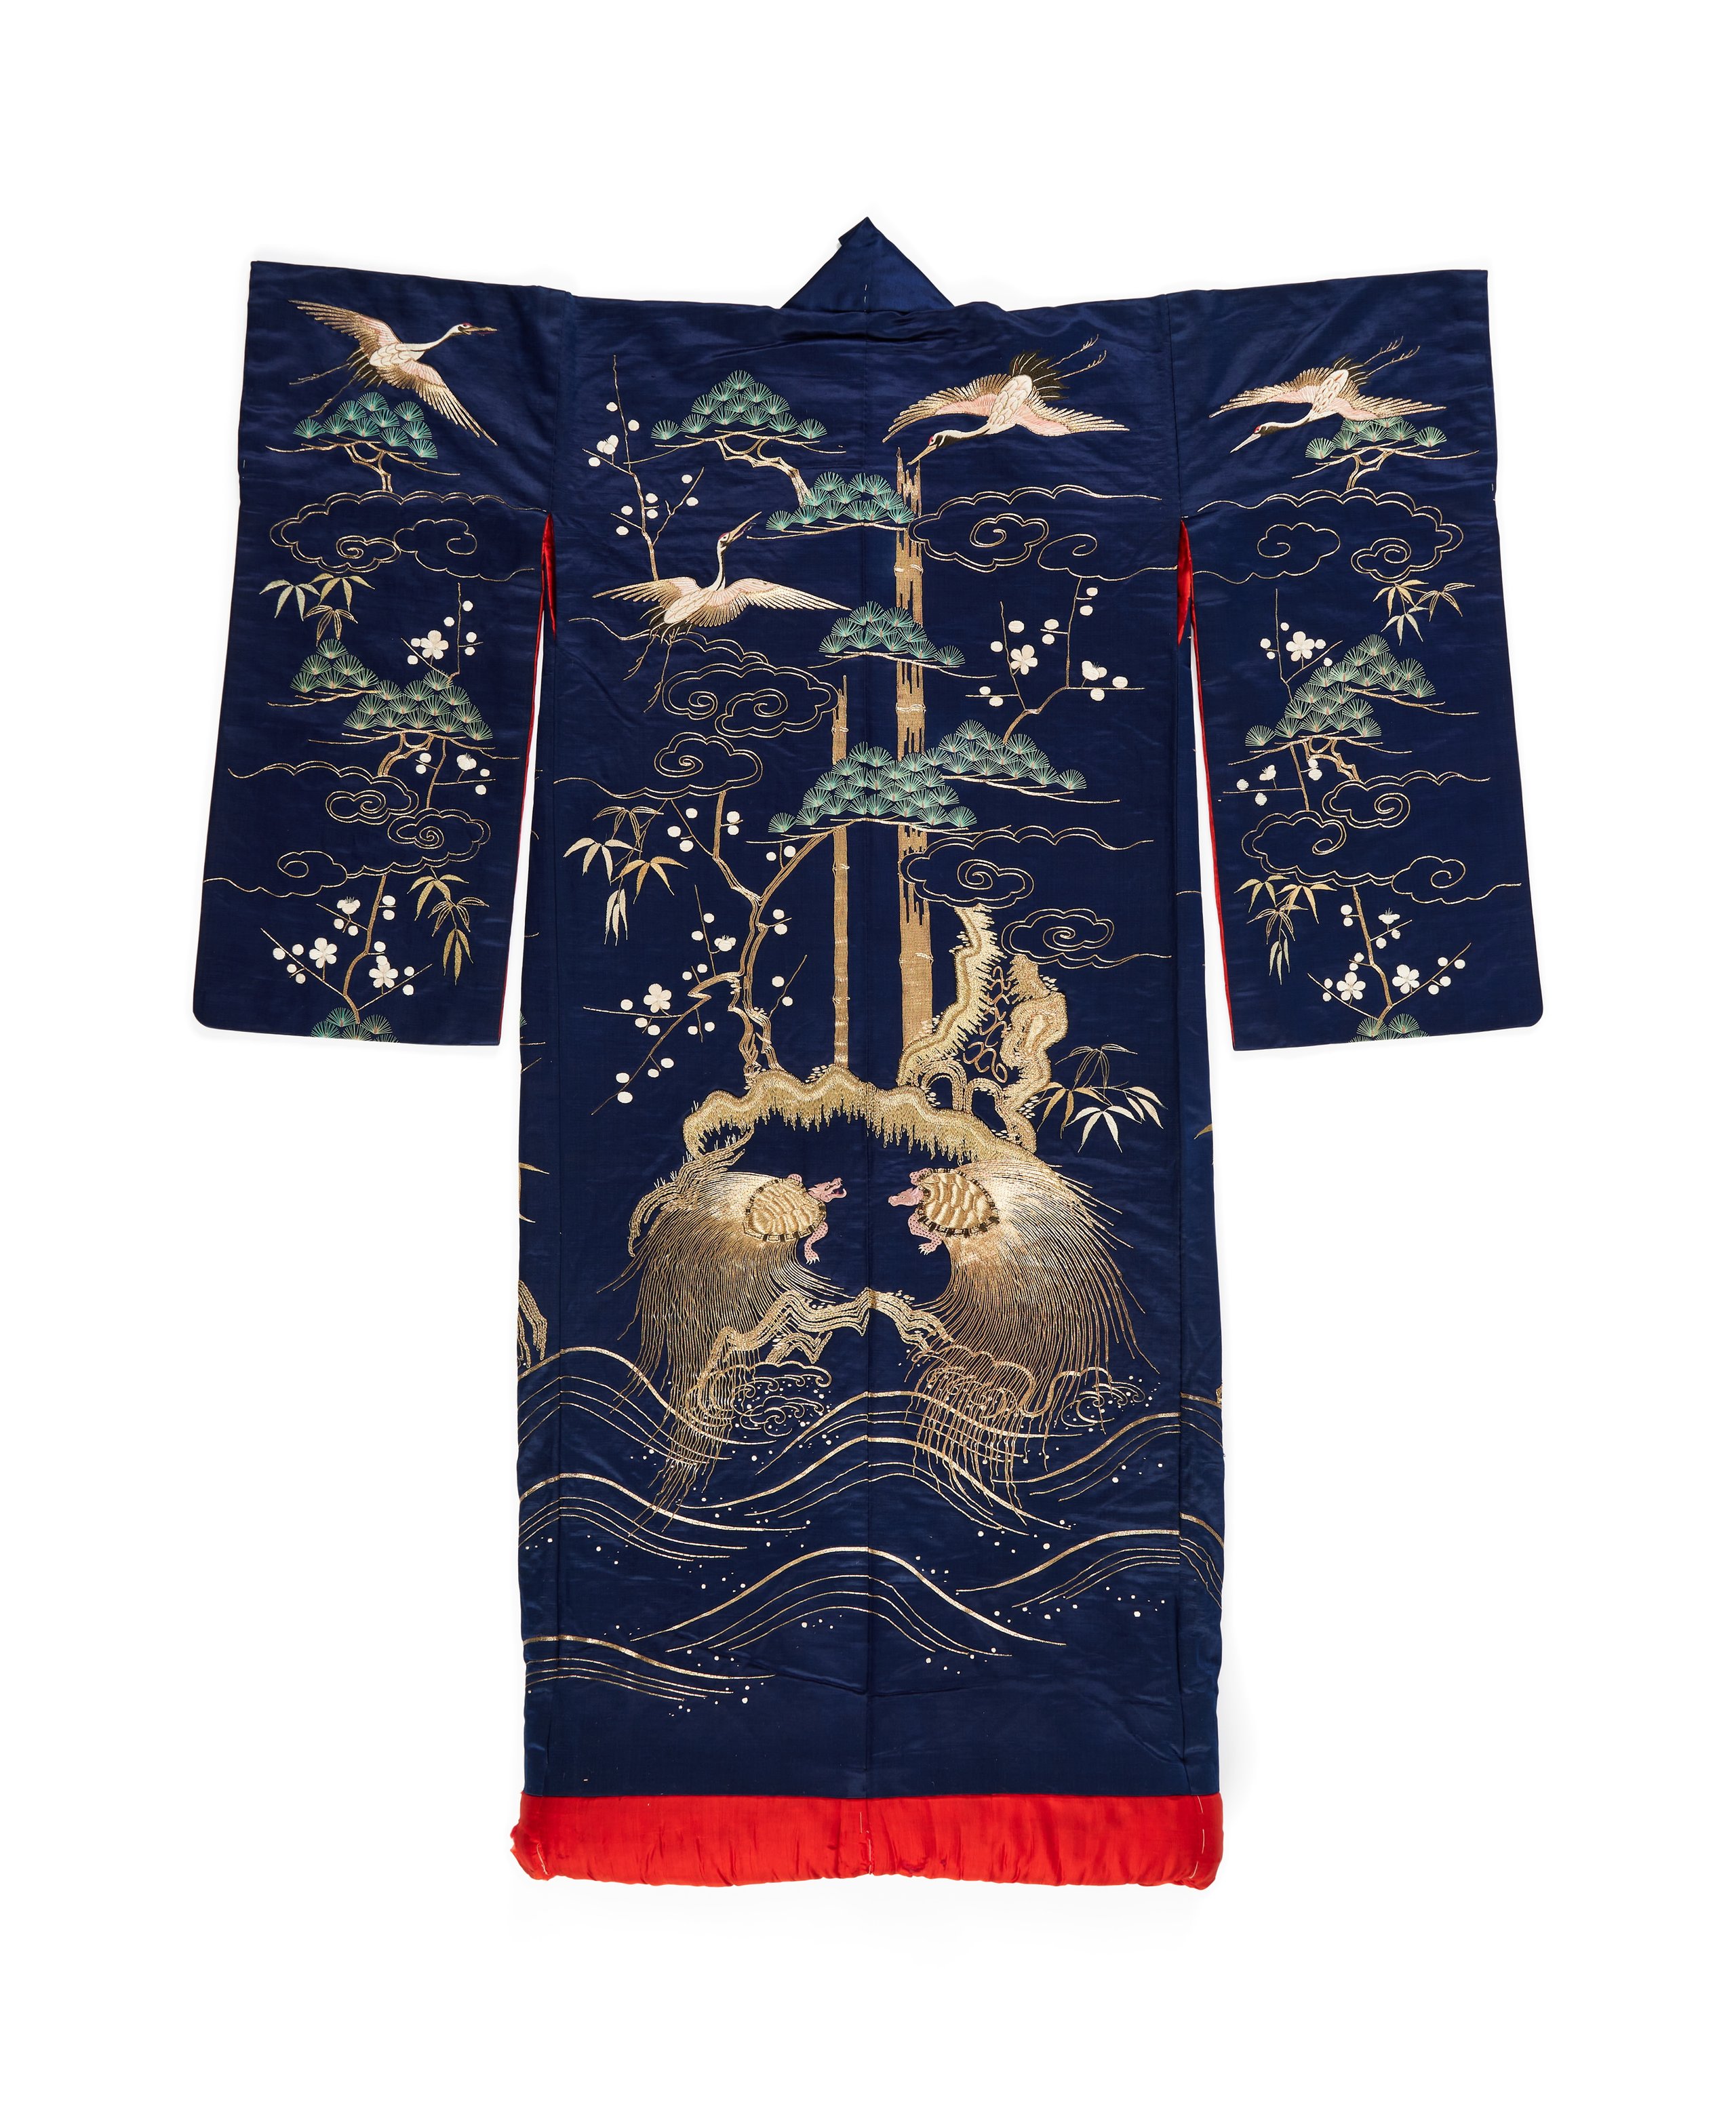 Formal kimono from Japan